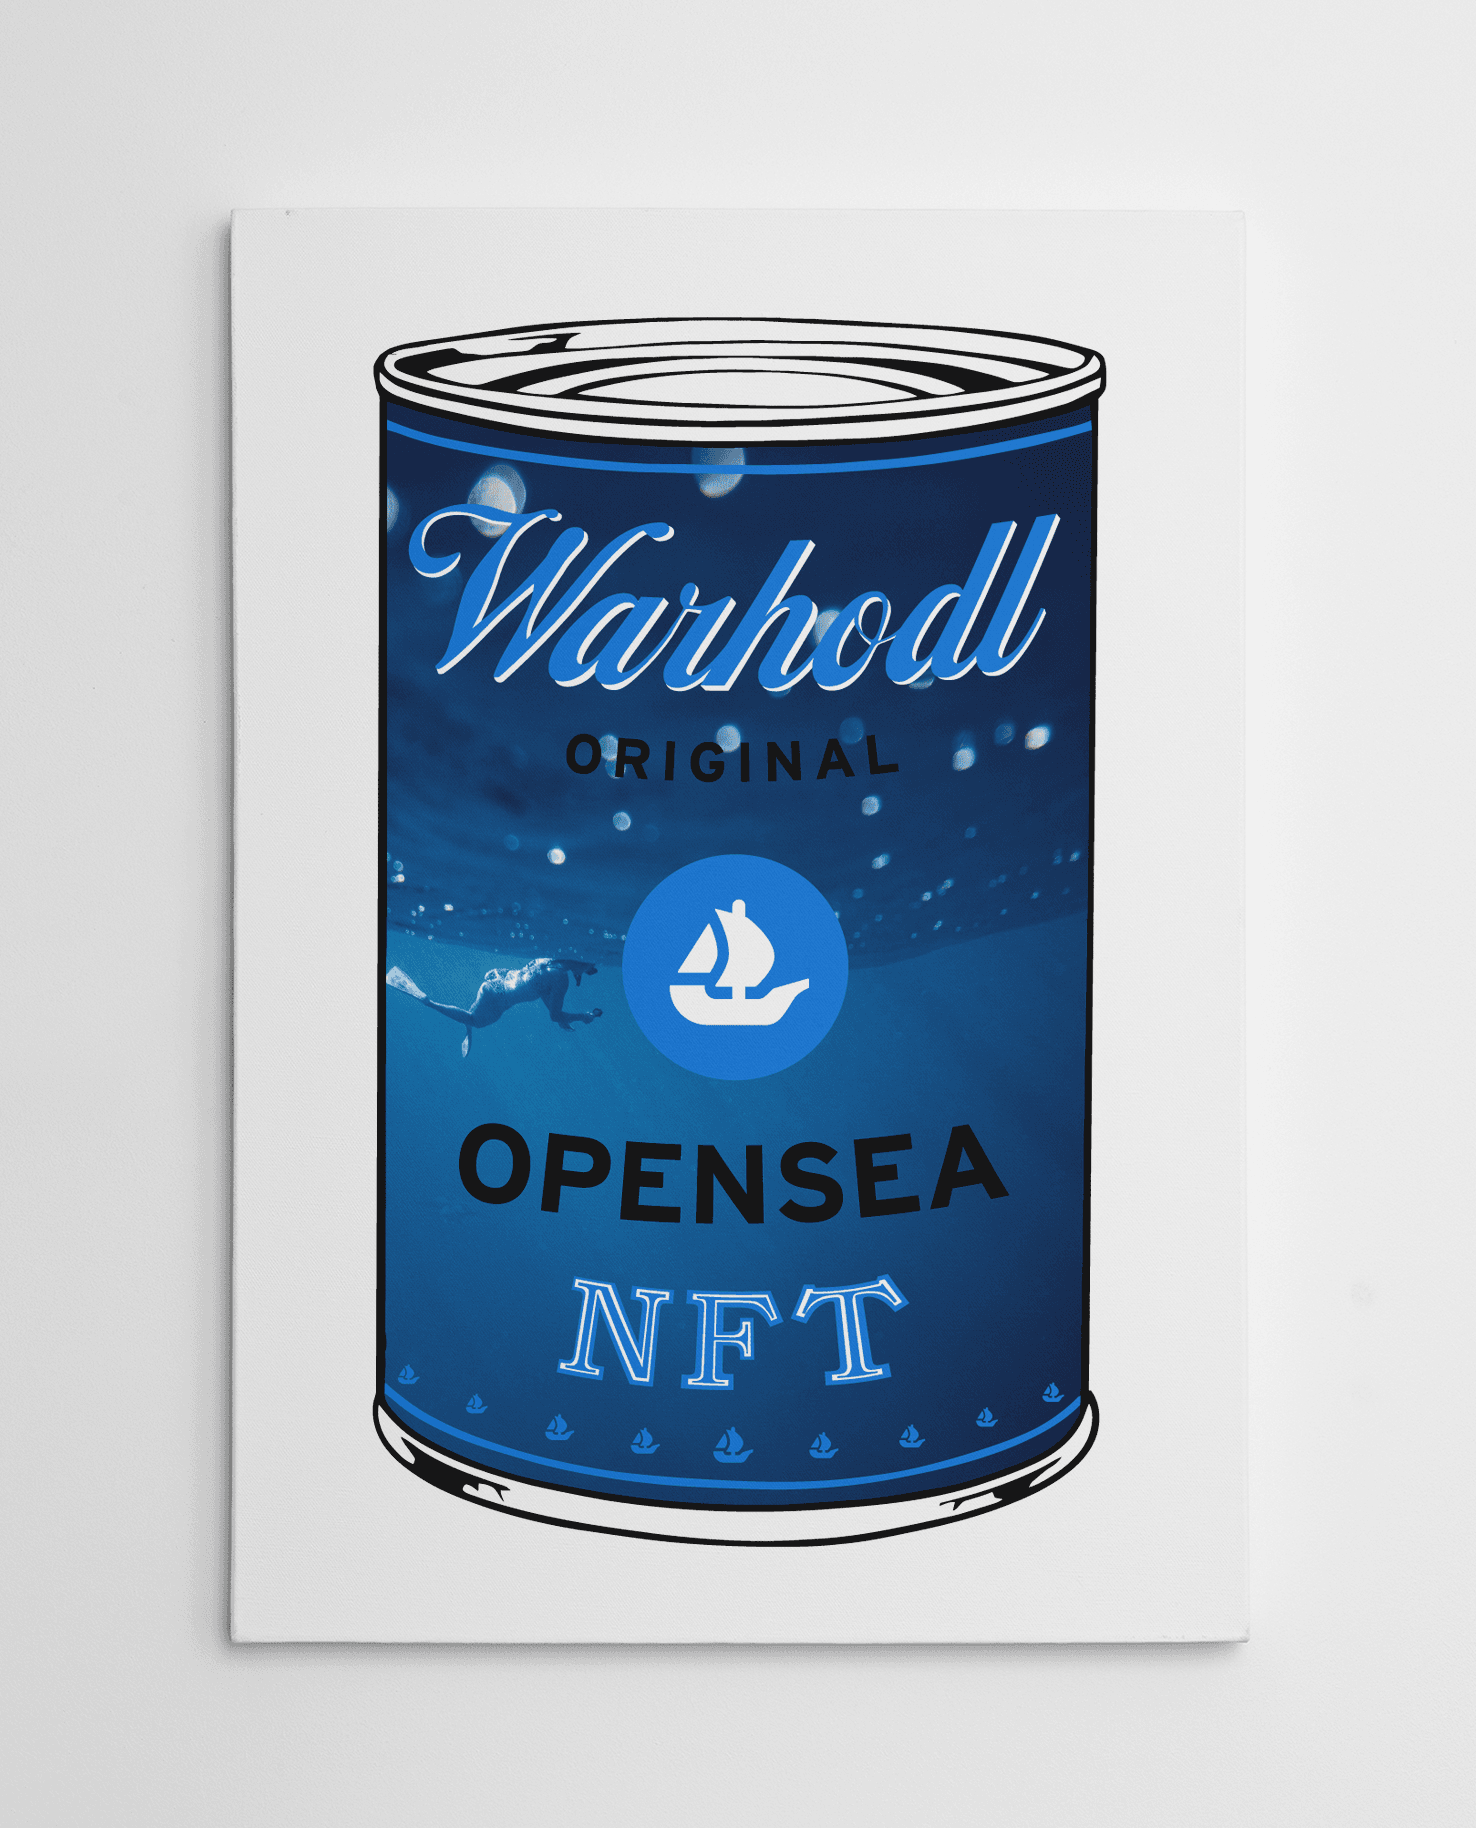 WARHODL Artist Proof "OPENSEA" Original Can